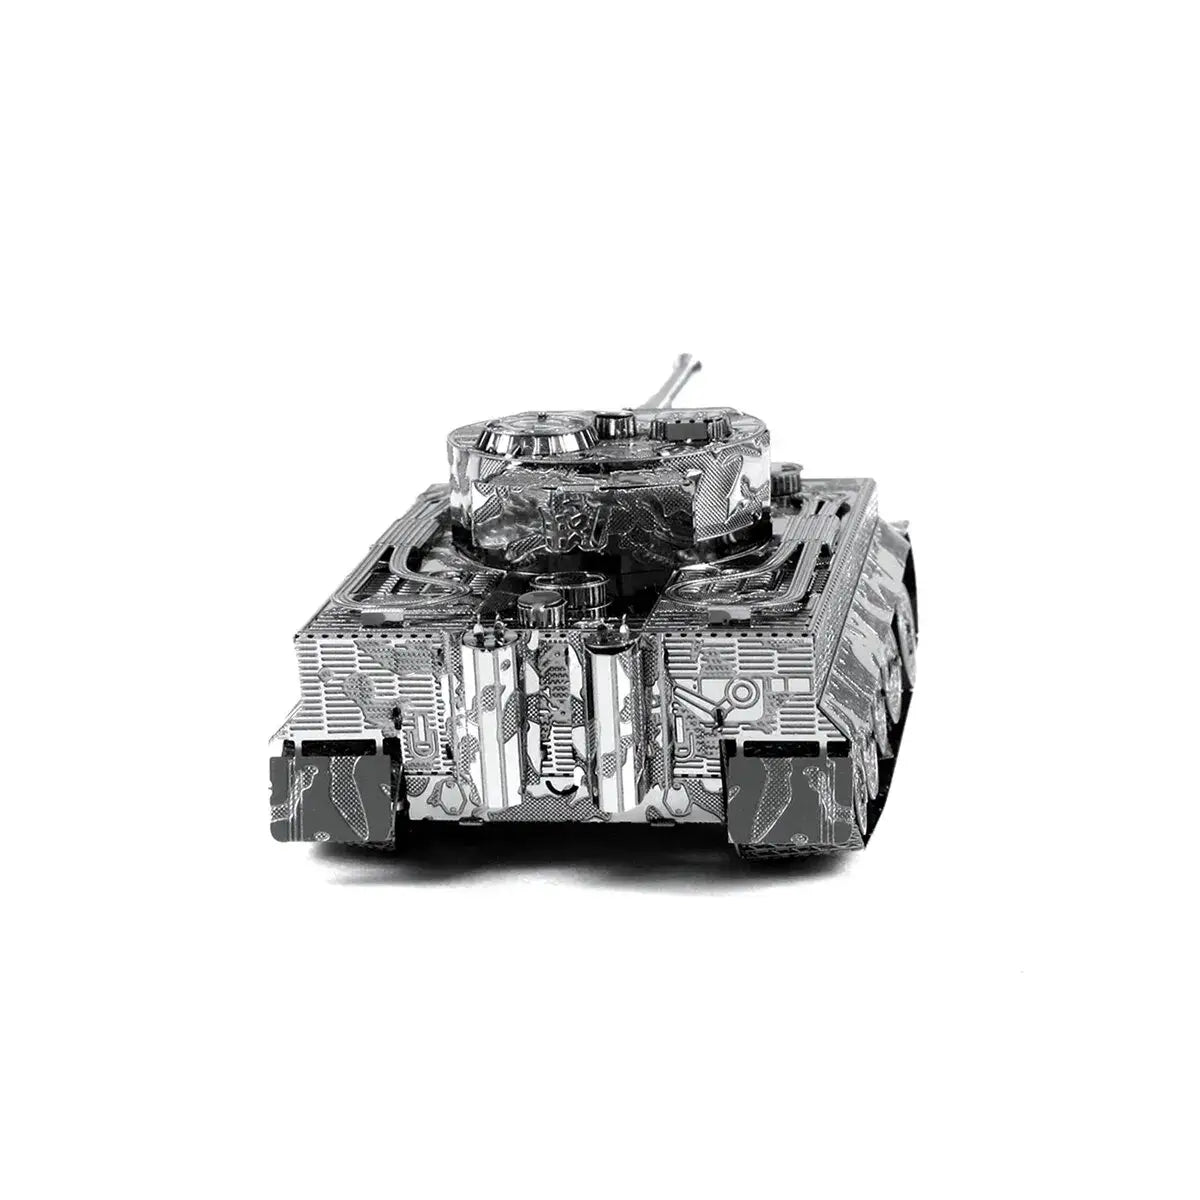 Puzzle Creative Tank 3D